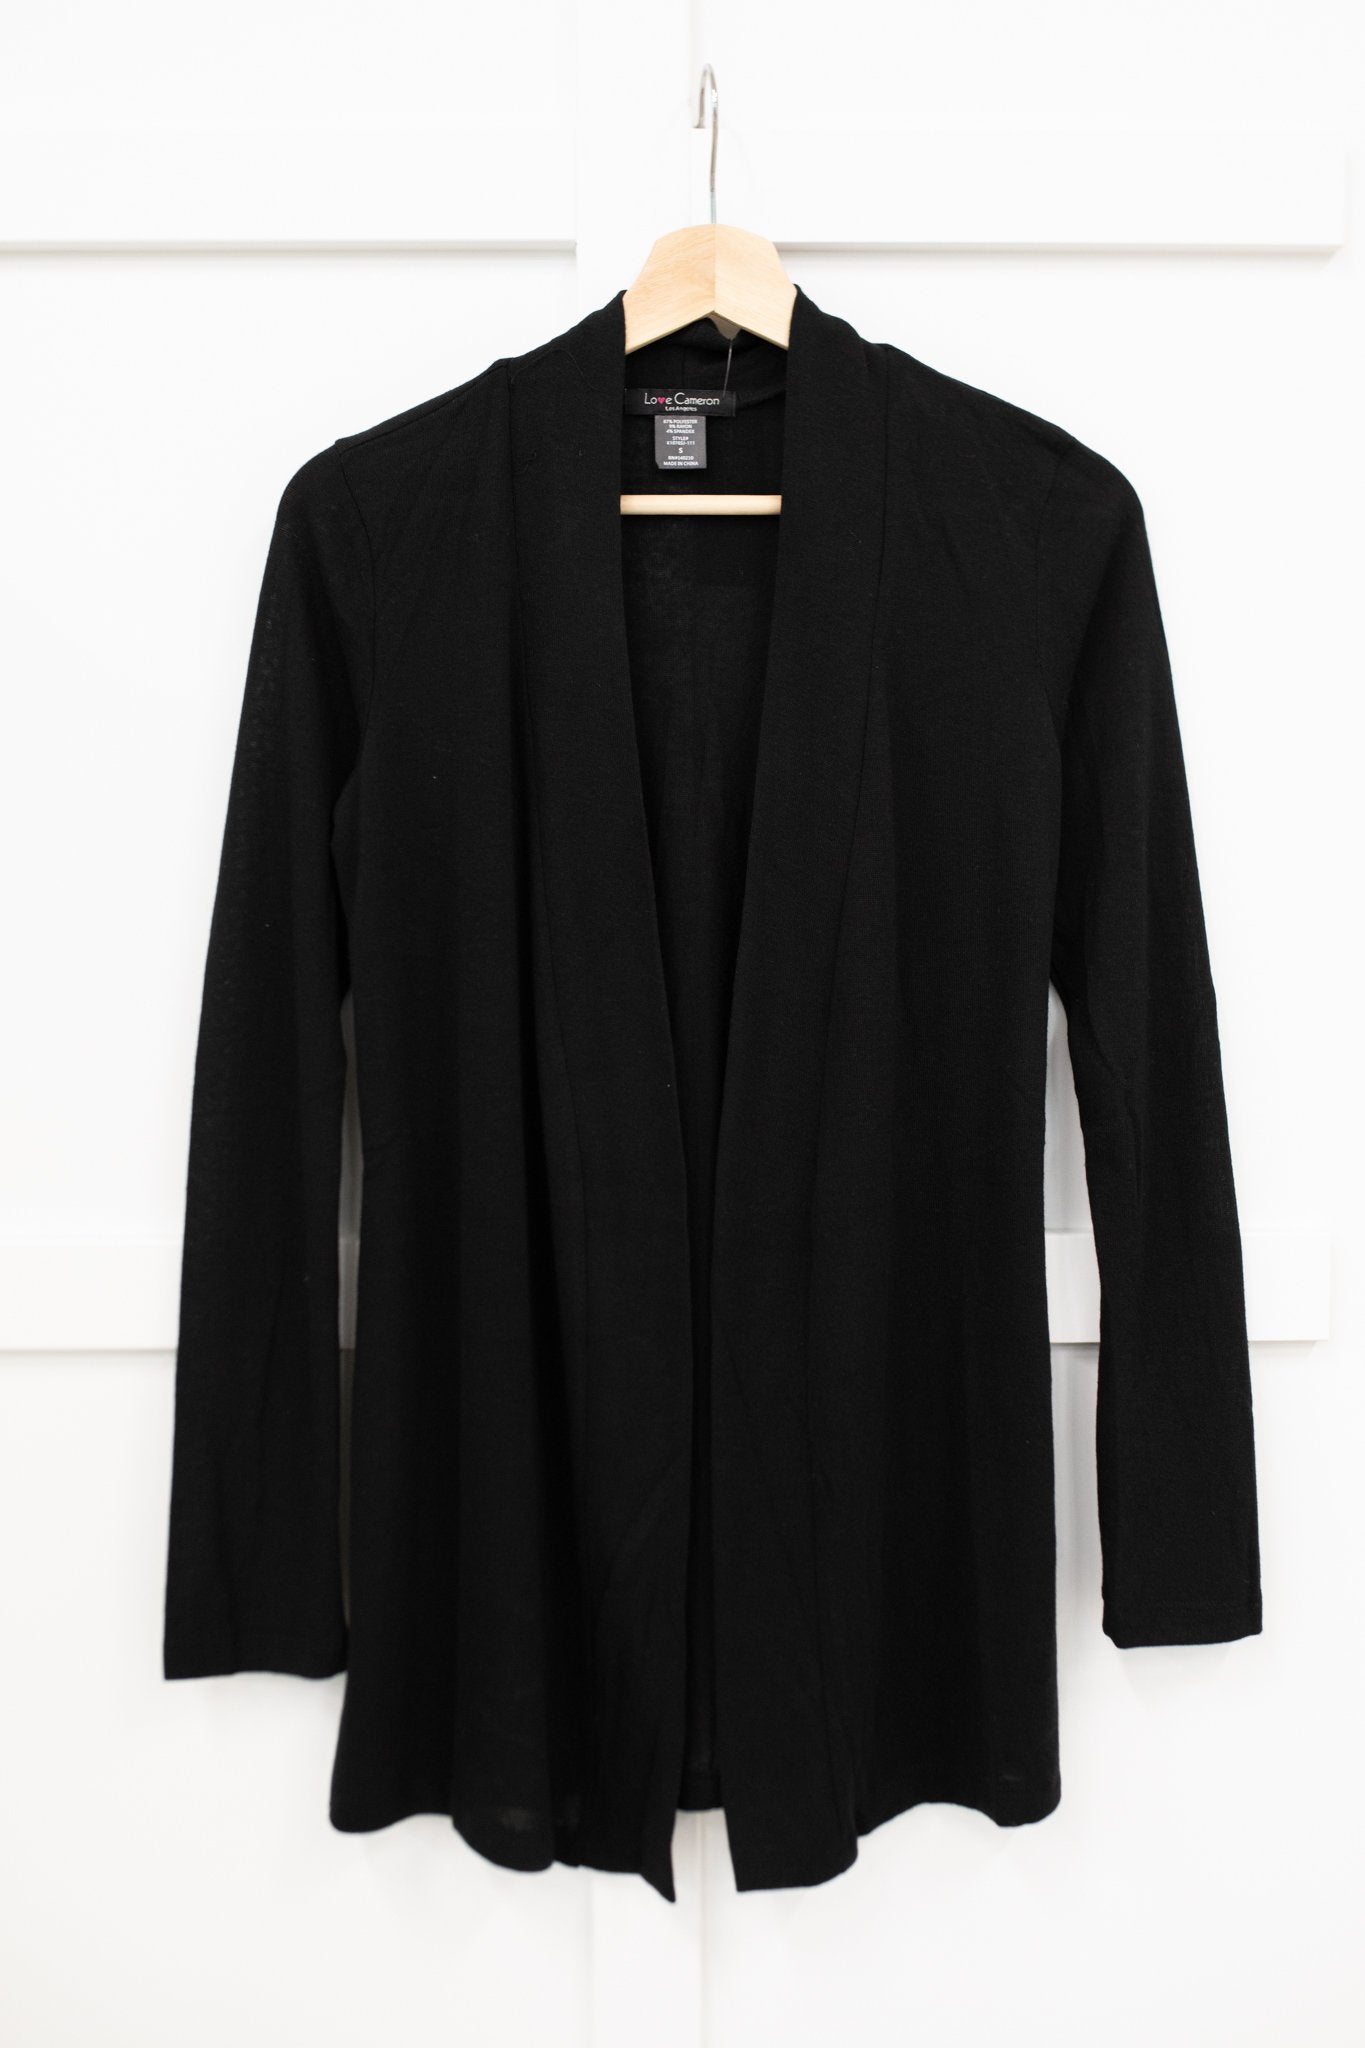 DOORBUSTER Sienna Sweater Knit Cardigan in Black